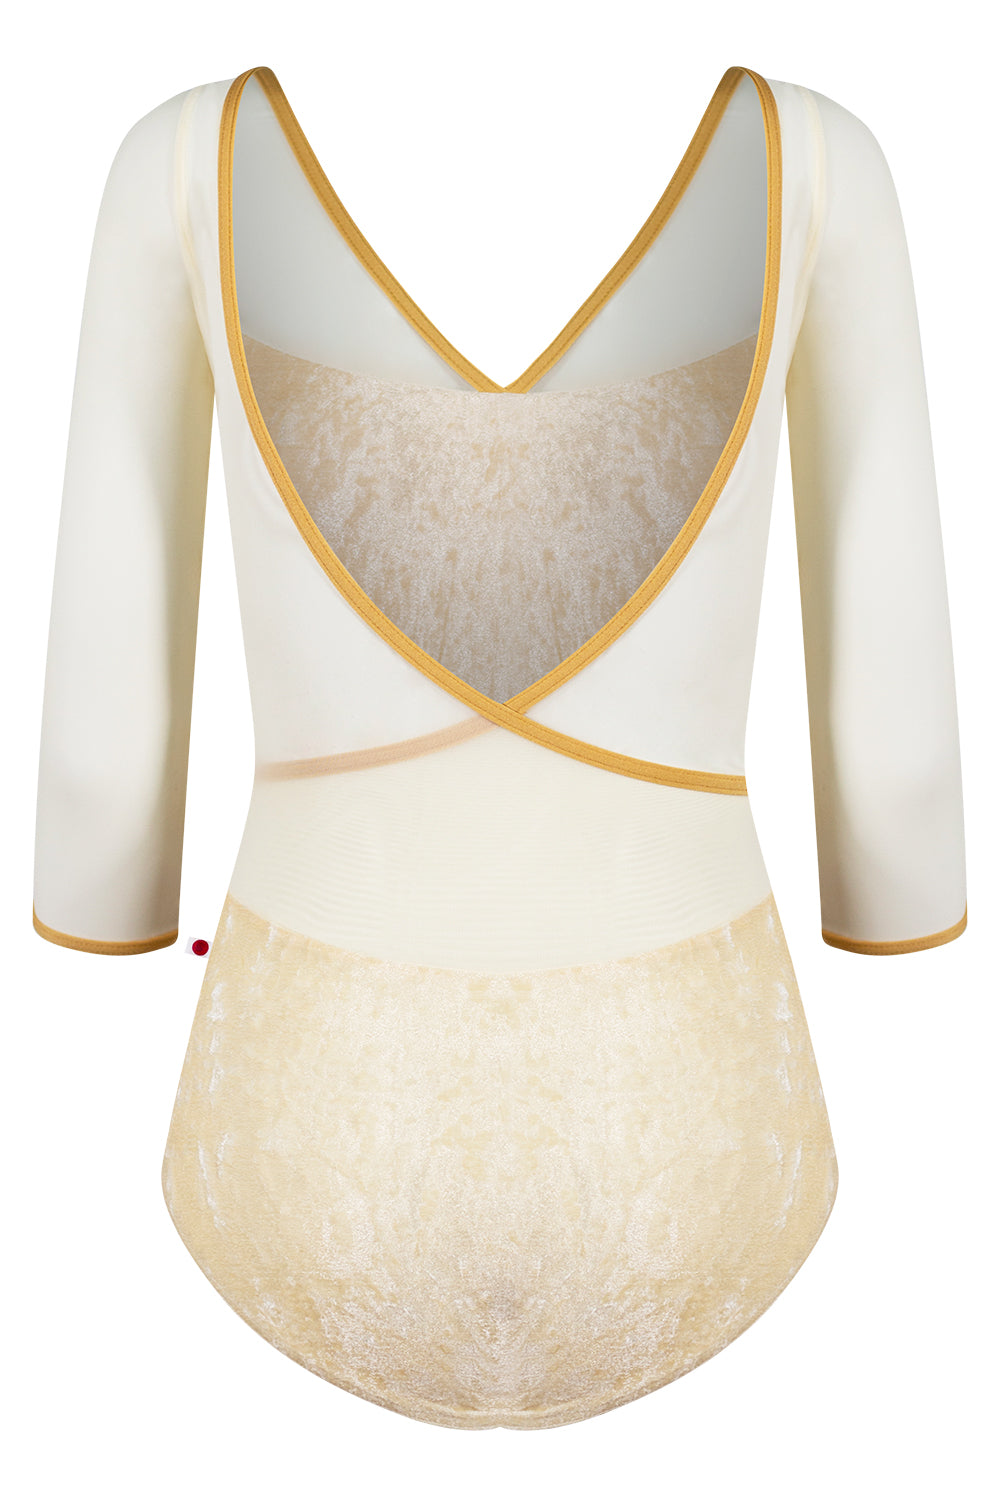 Masha leotard in CV-Vanilla body color with Mesh Vanilla top & 3Q sleeve color and N-Glow trim color